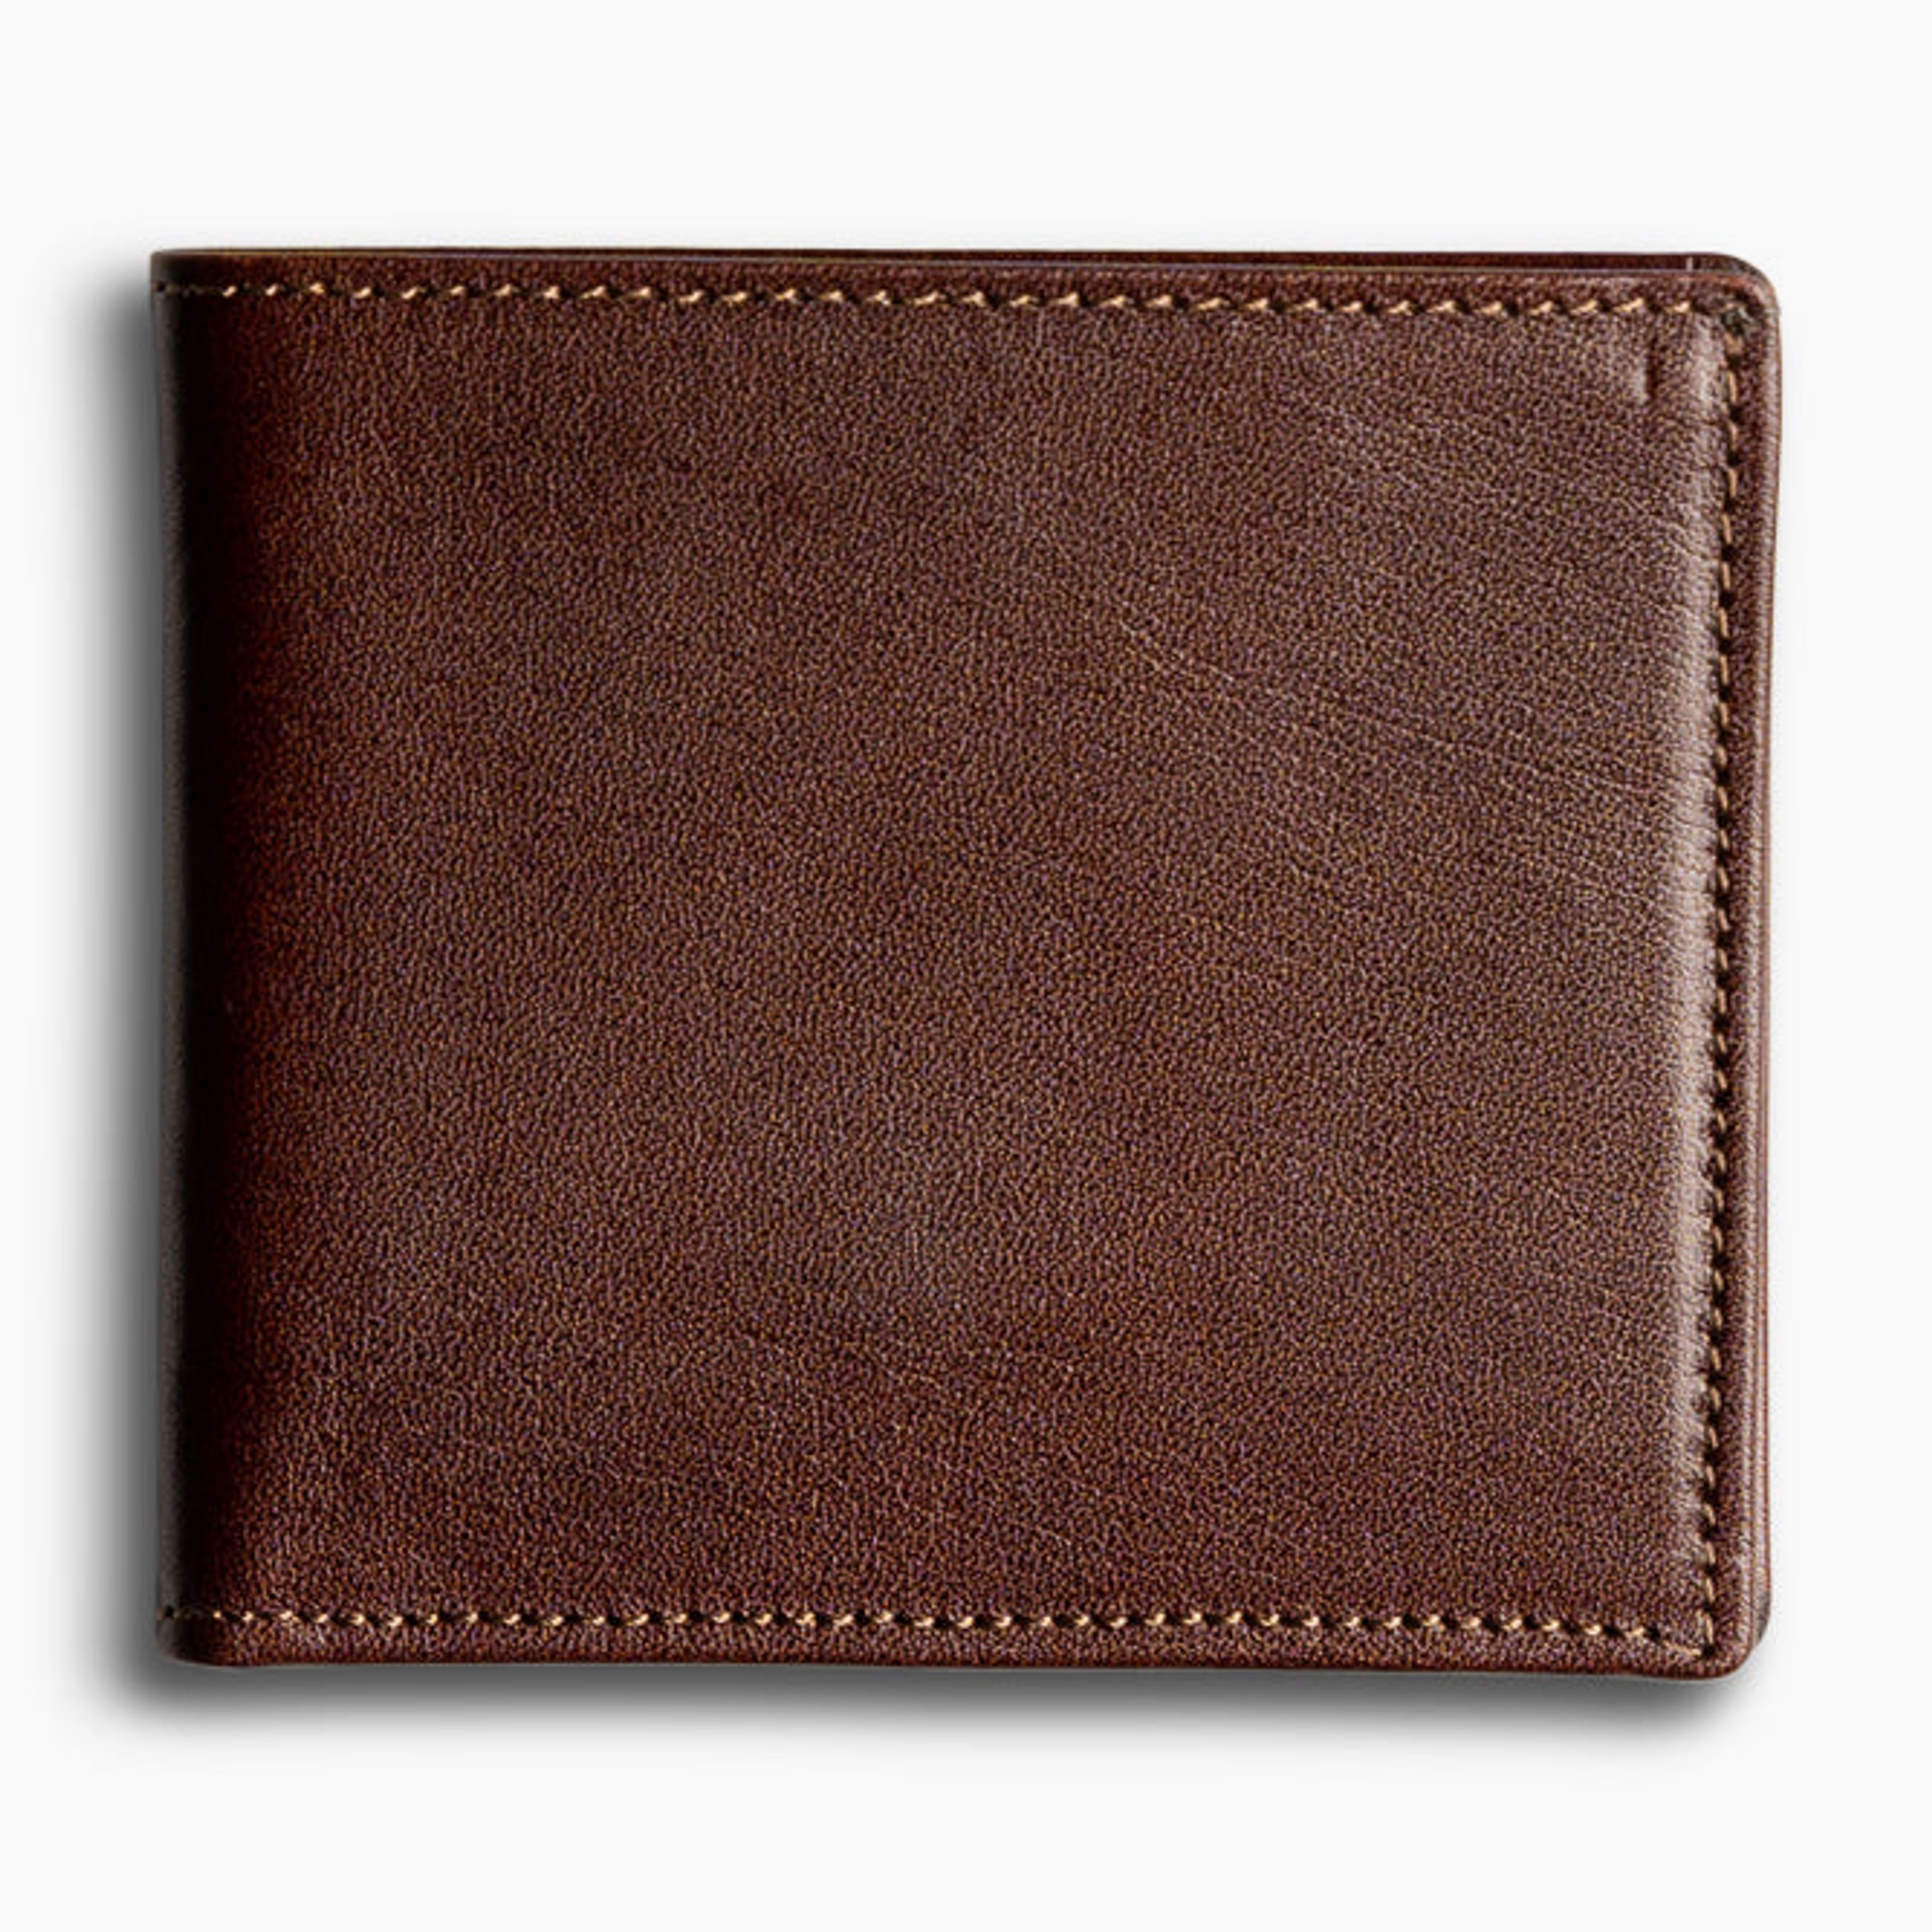 Two Fold Wallet